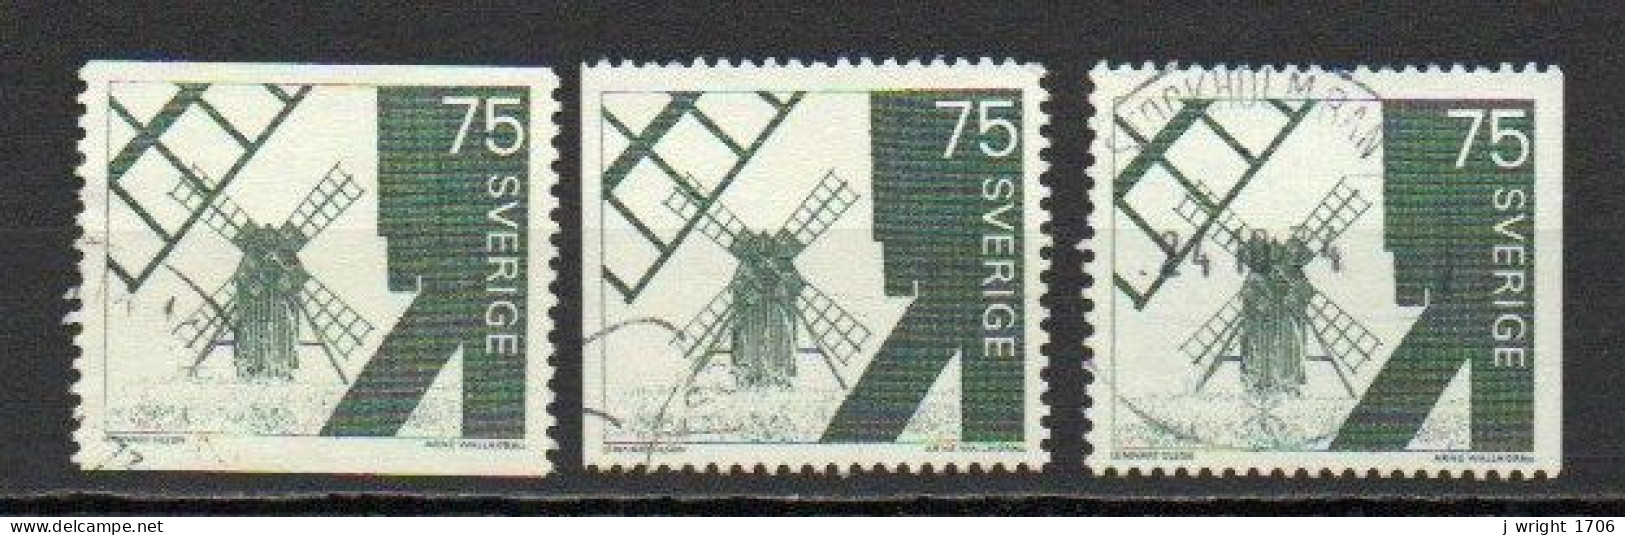 Sweden, 1971, Windmill Ölana Island, 75ö, USED - Gebruikt